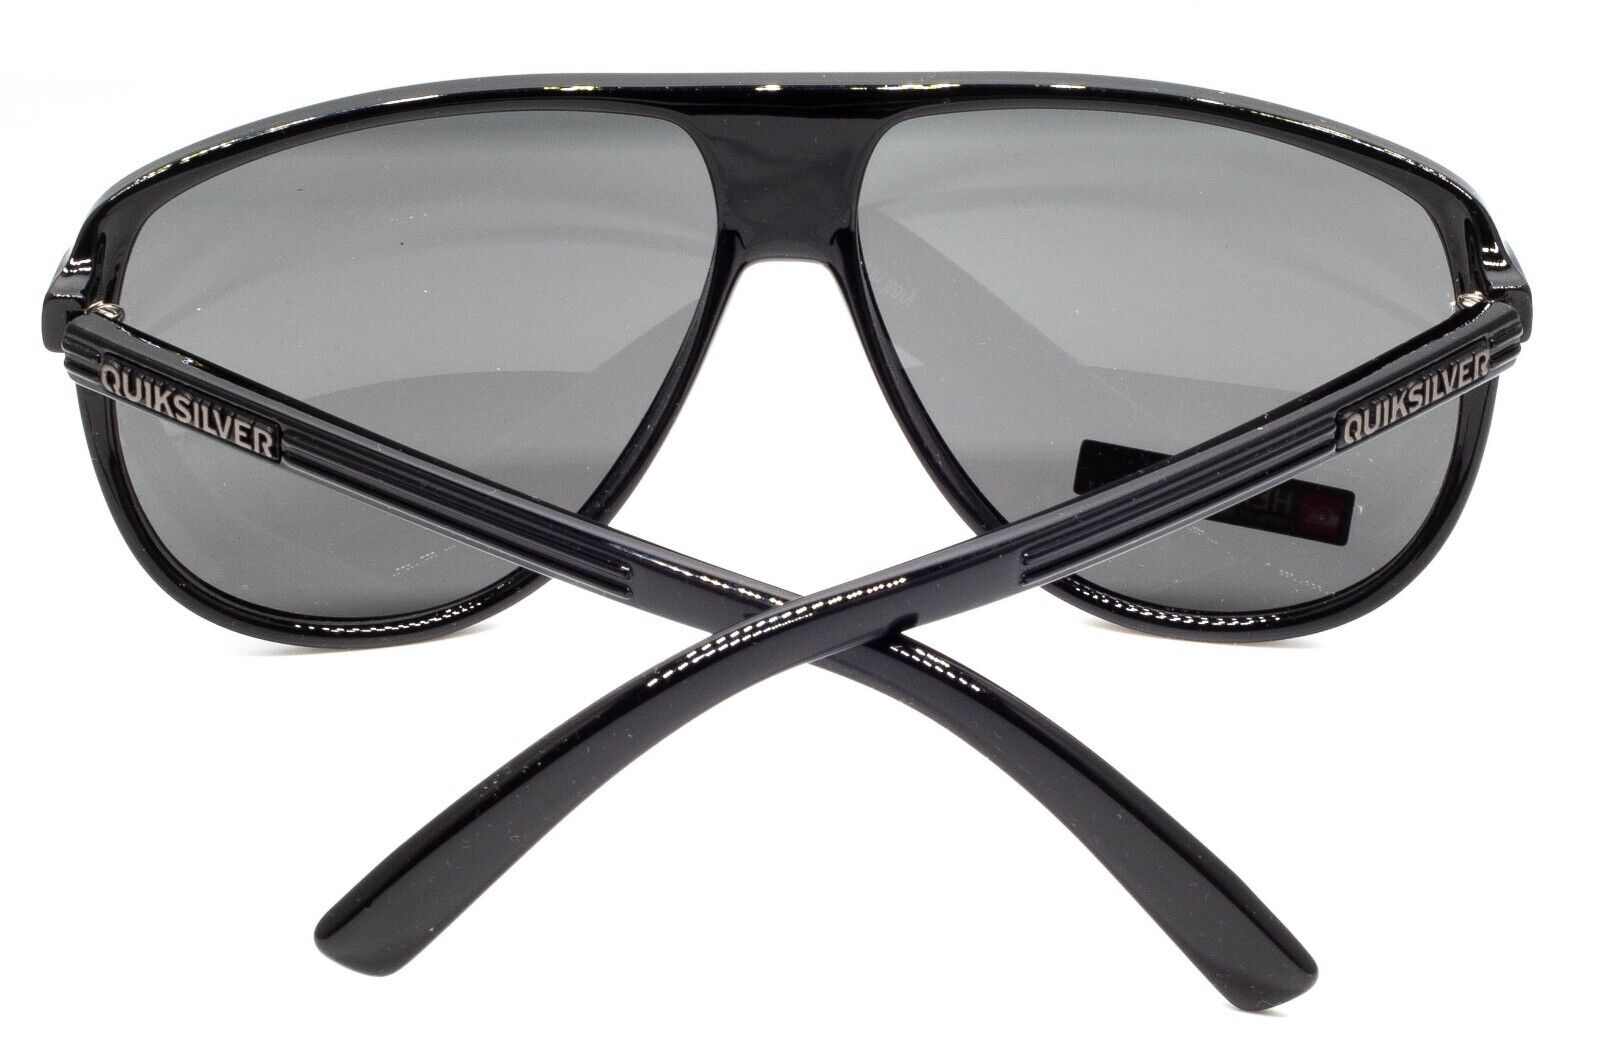 QUIKSILVER HEAT QS1176 229 4231441 -Italy Eyewear Glasses Shades - Sunglasses Eyewear 59mm GGV